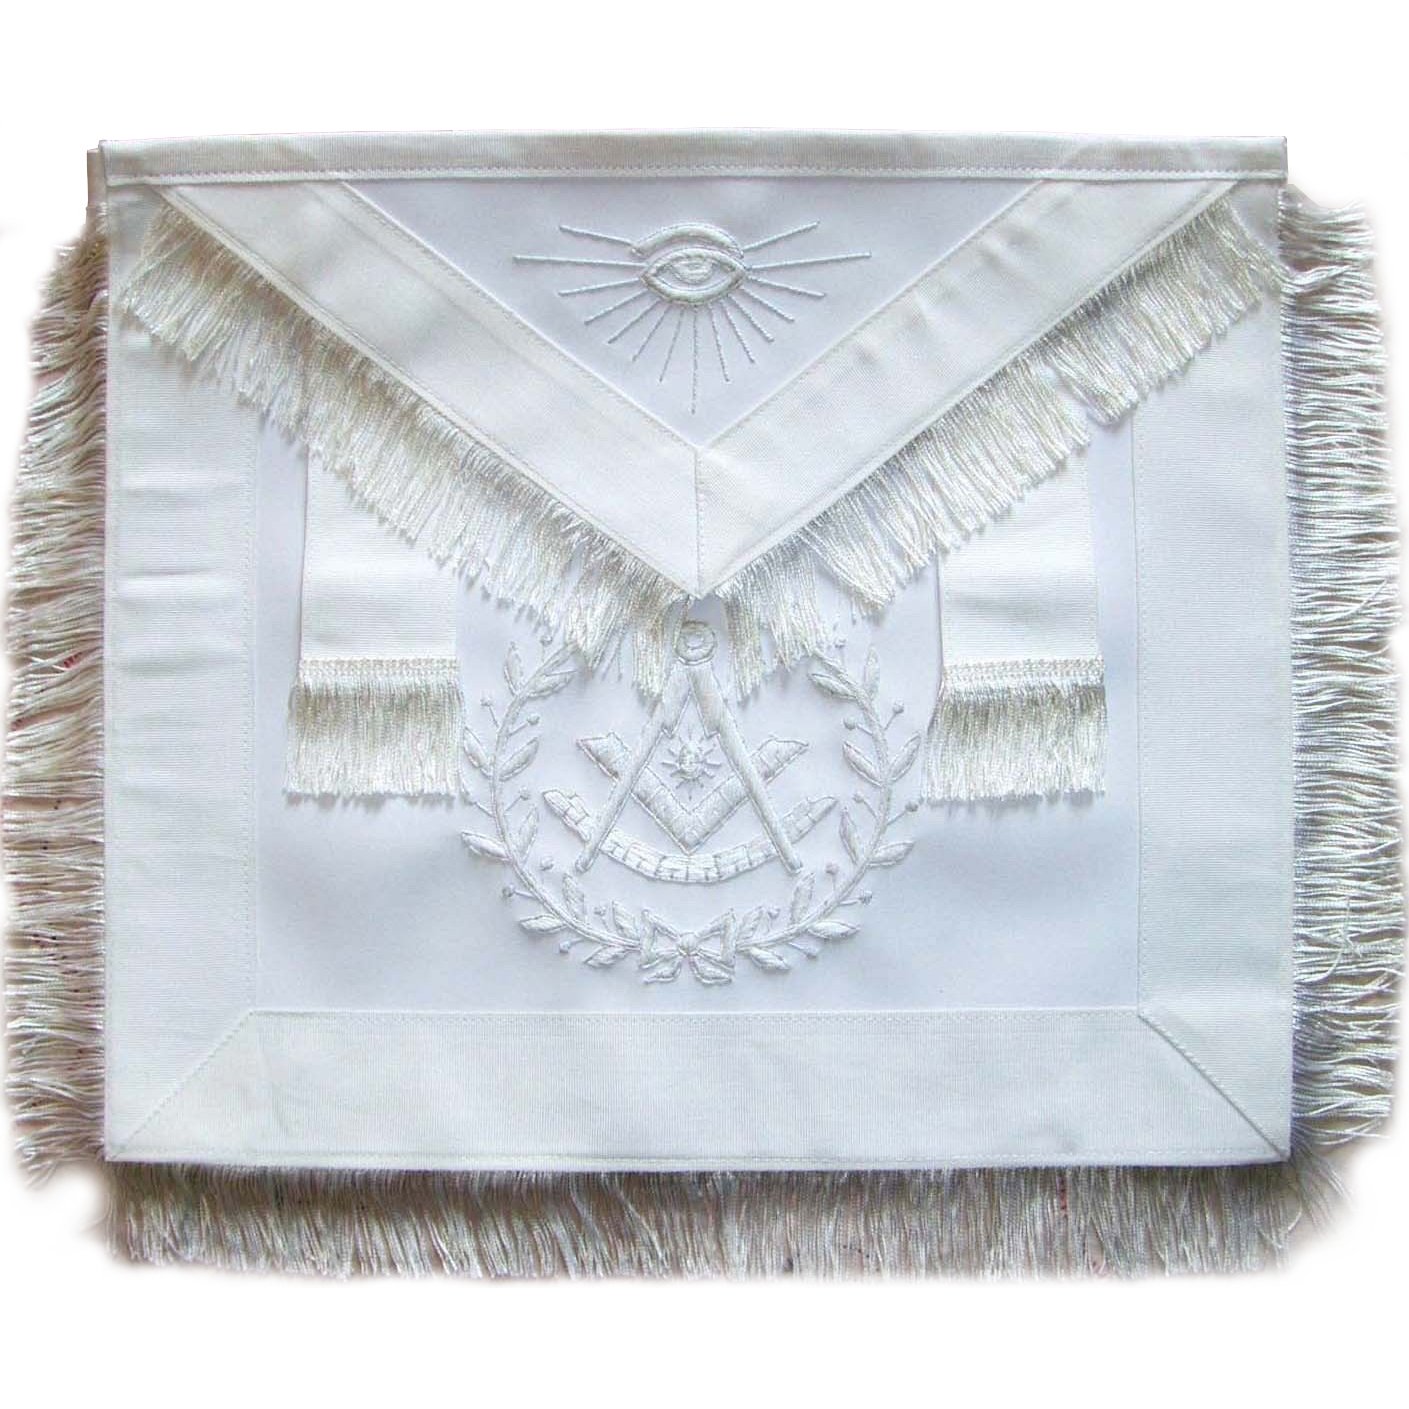 Past Master Blue Lodge Apron - All White with Wreath & Fringe Tassels - Bricks Masons